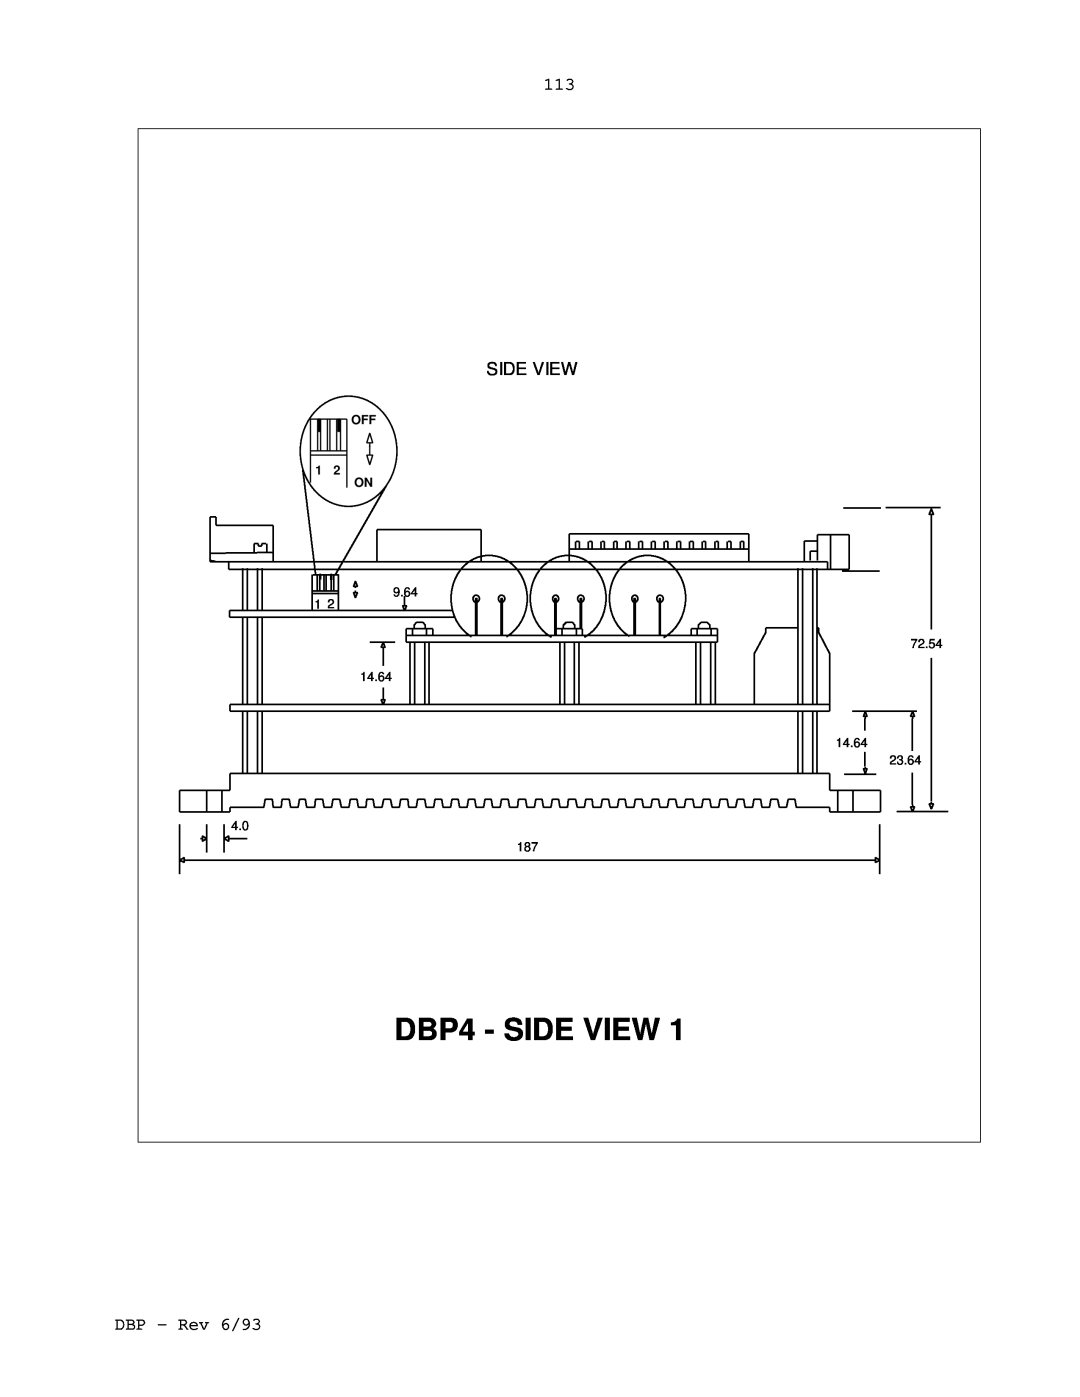 Elmo DBP SERIES manual DBP4 - SIDE VIEW, Side View, 9.64, 14.64, 23.64 